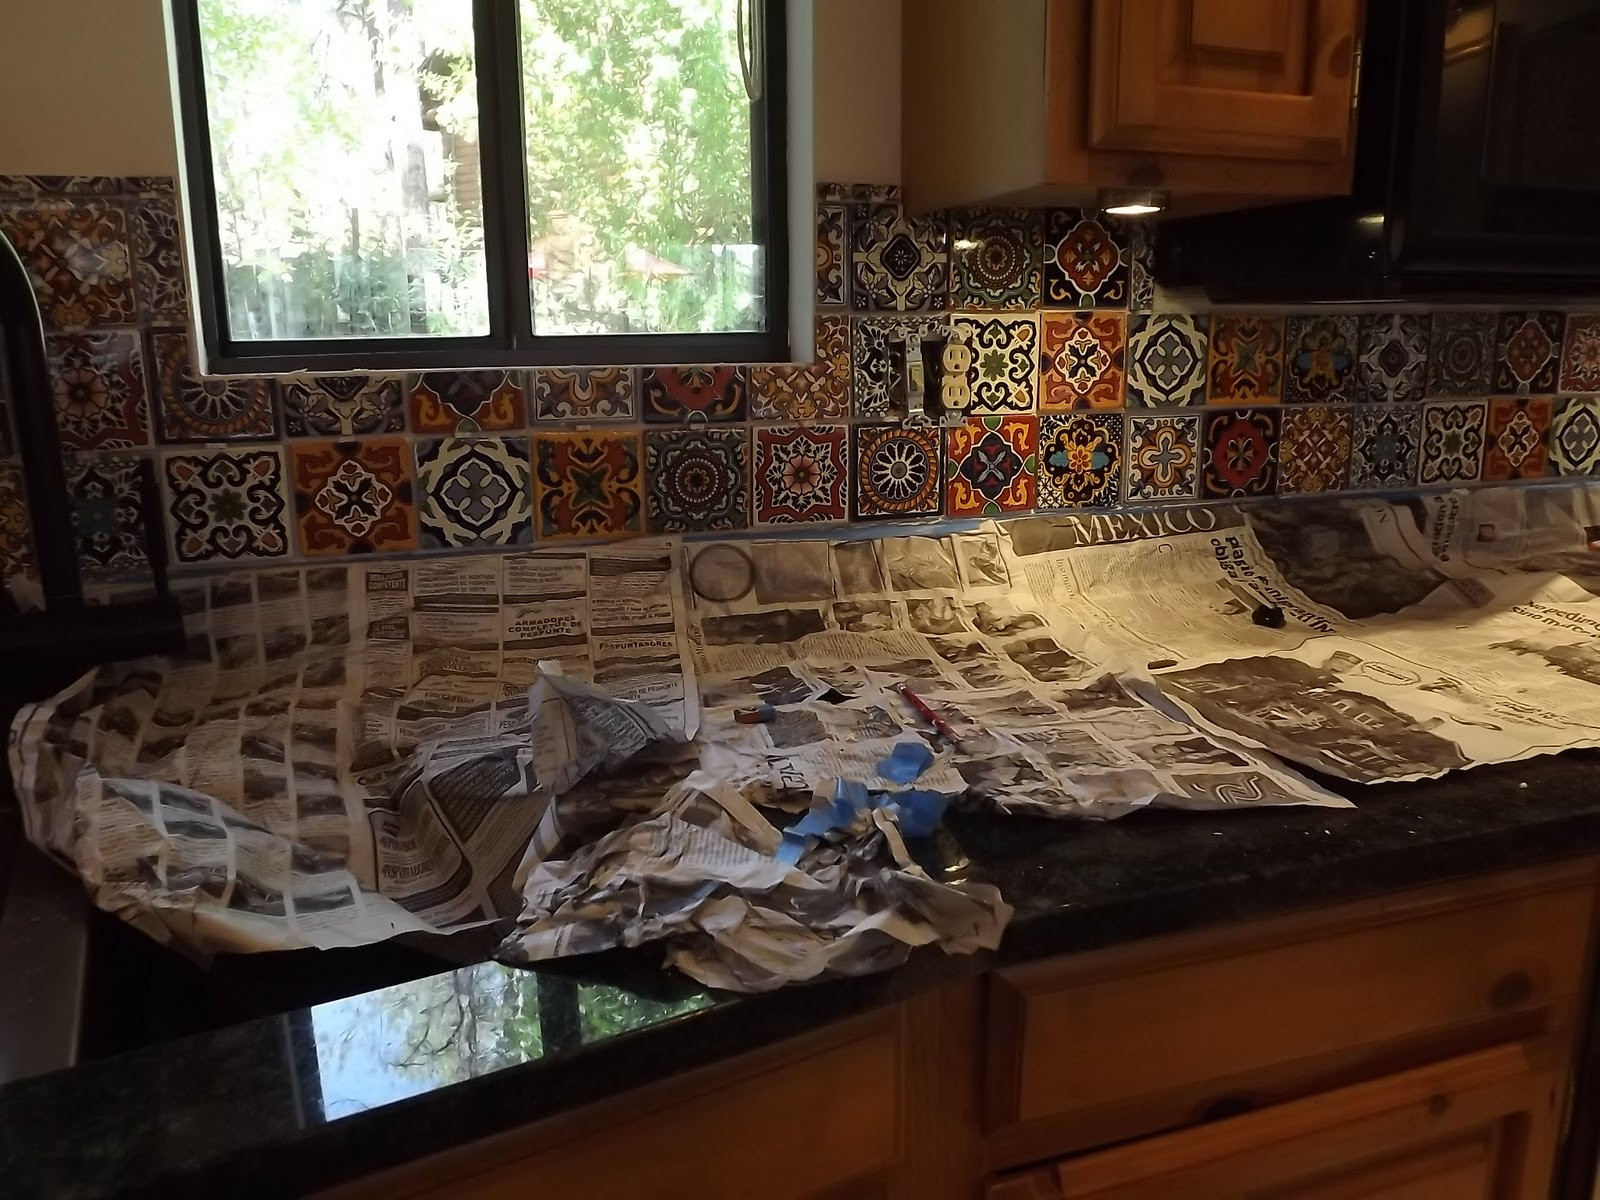 Mexican Tile Backsplash Kitchen
 Dusty Coyote Mexican Tile Kitchen Backsplash DIY